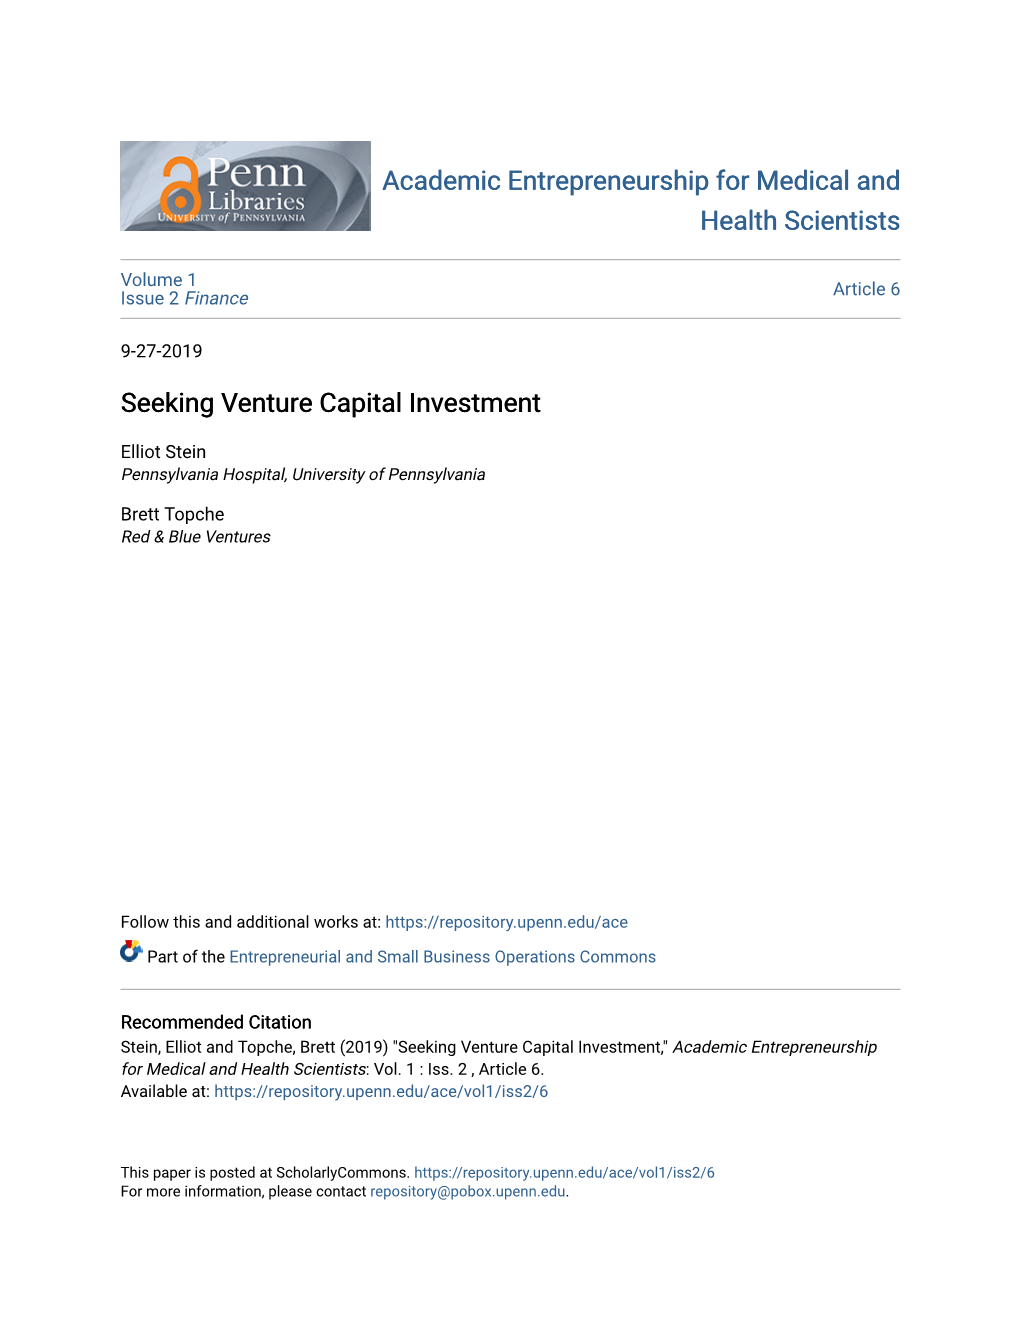 Seeking Venture Capital Investment